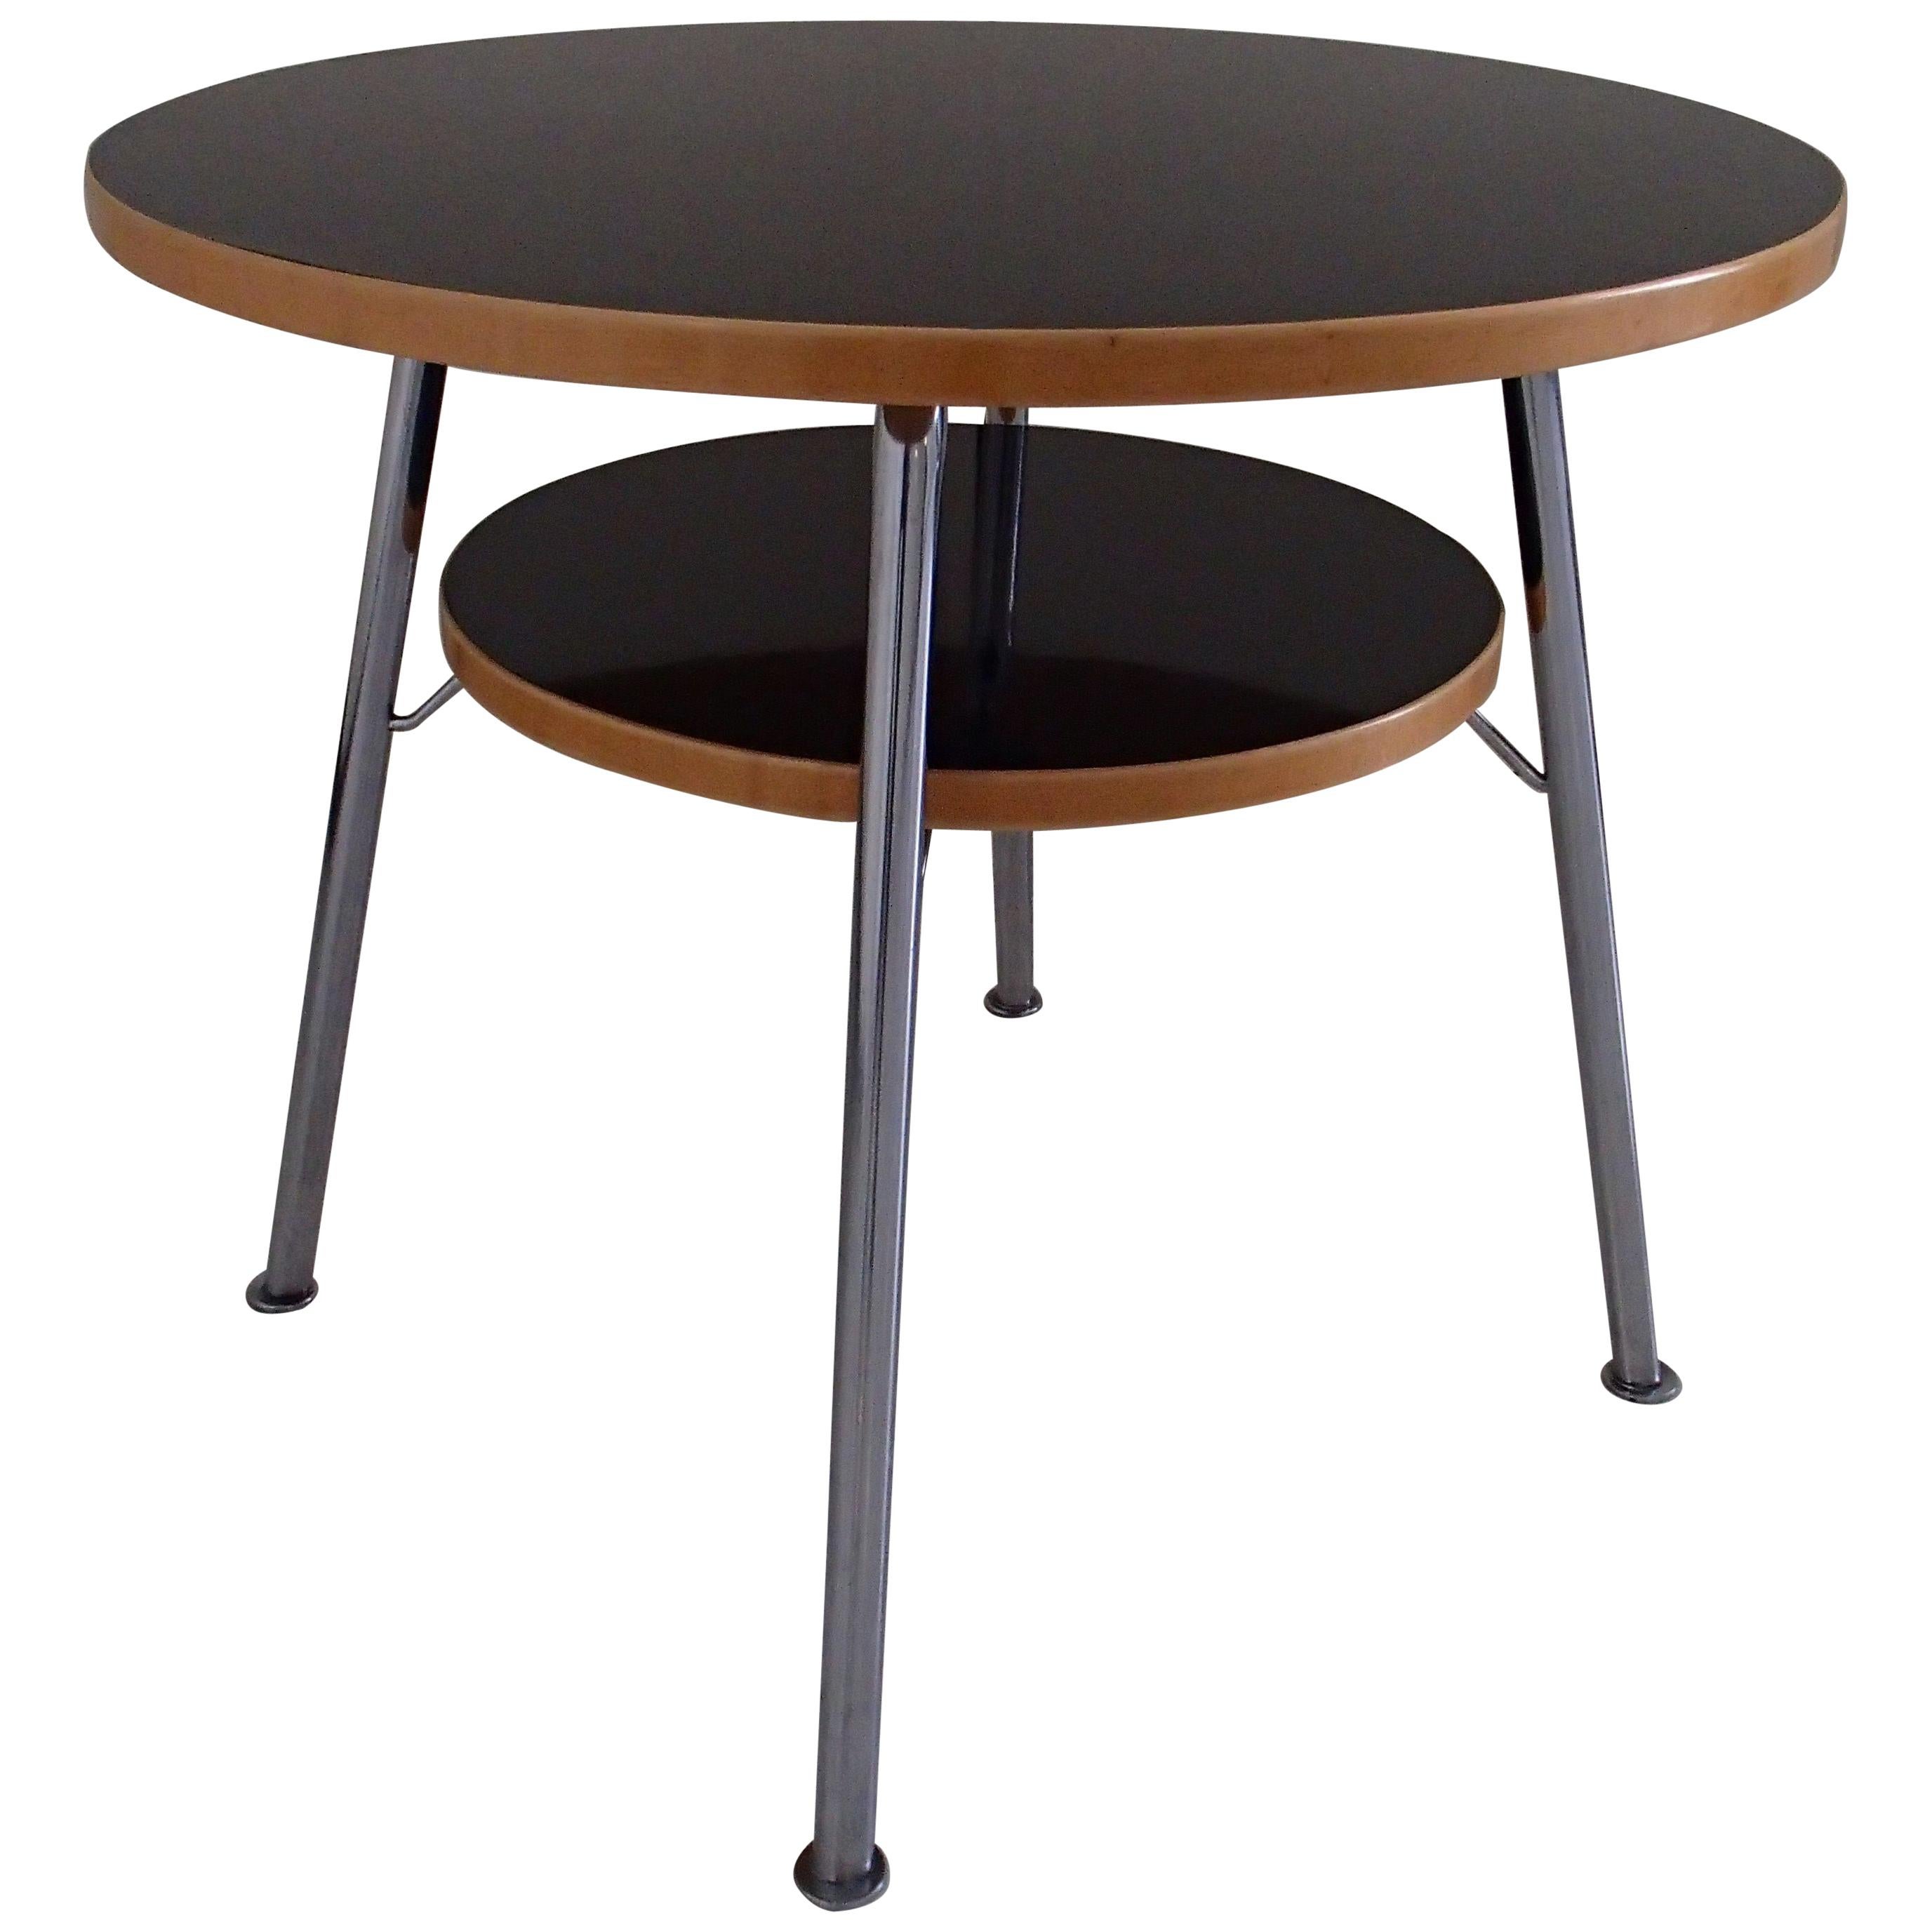 Bauhaus Round Center Table Birch and Black Kelko on Four Chrome Legs